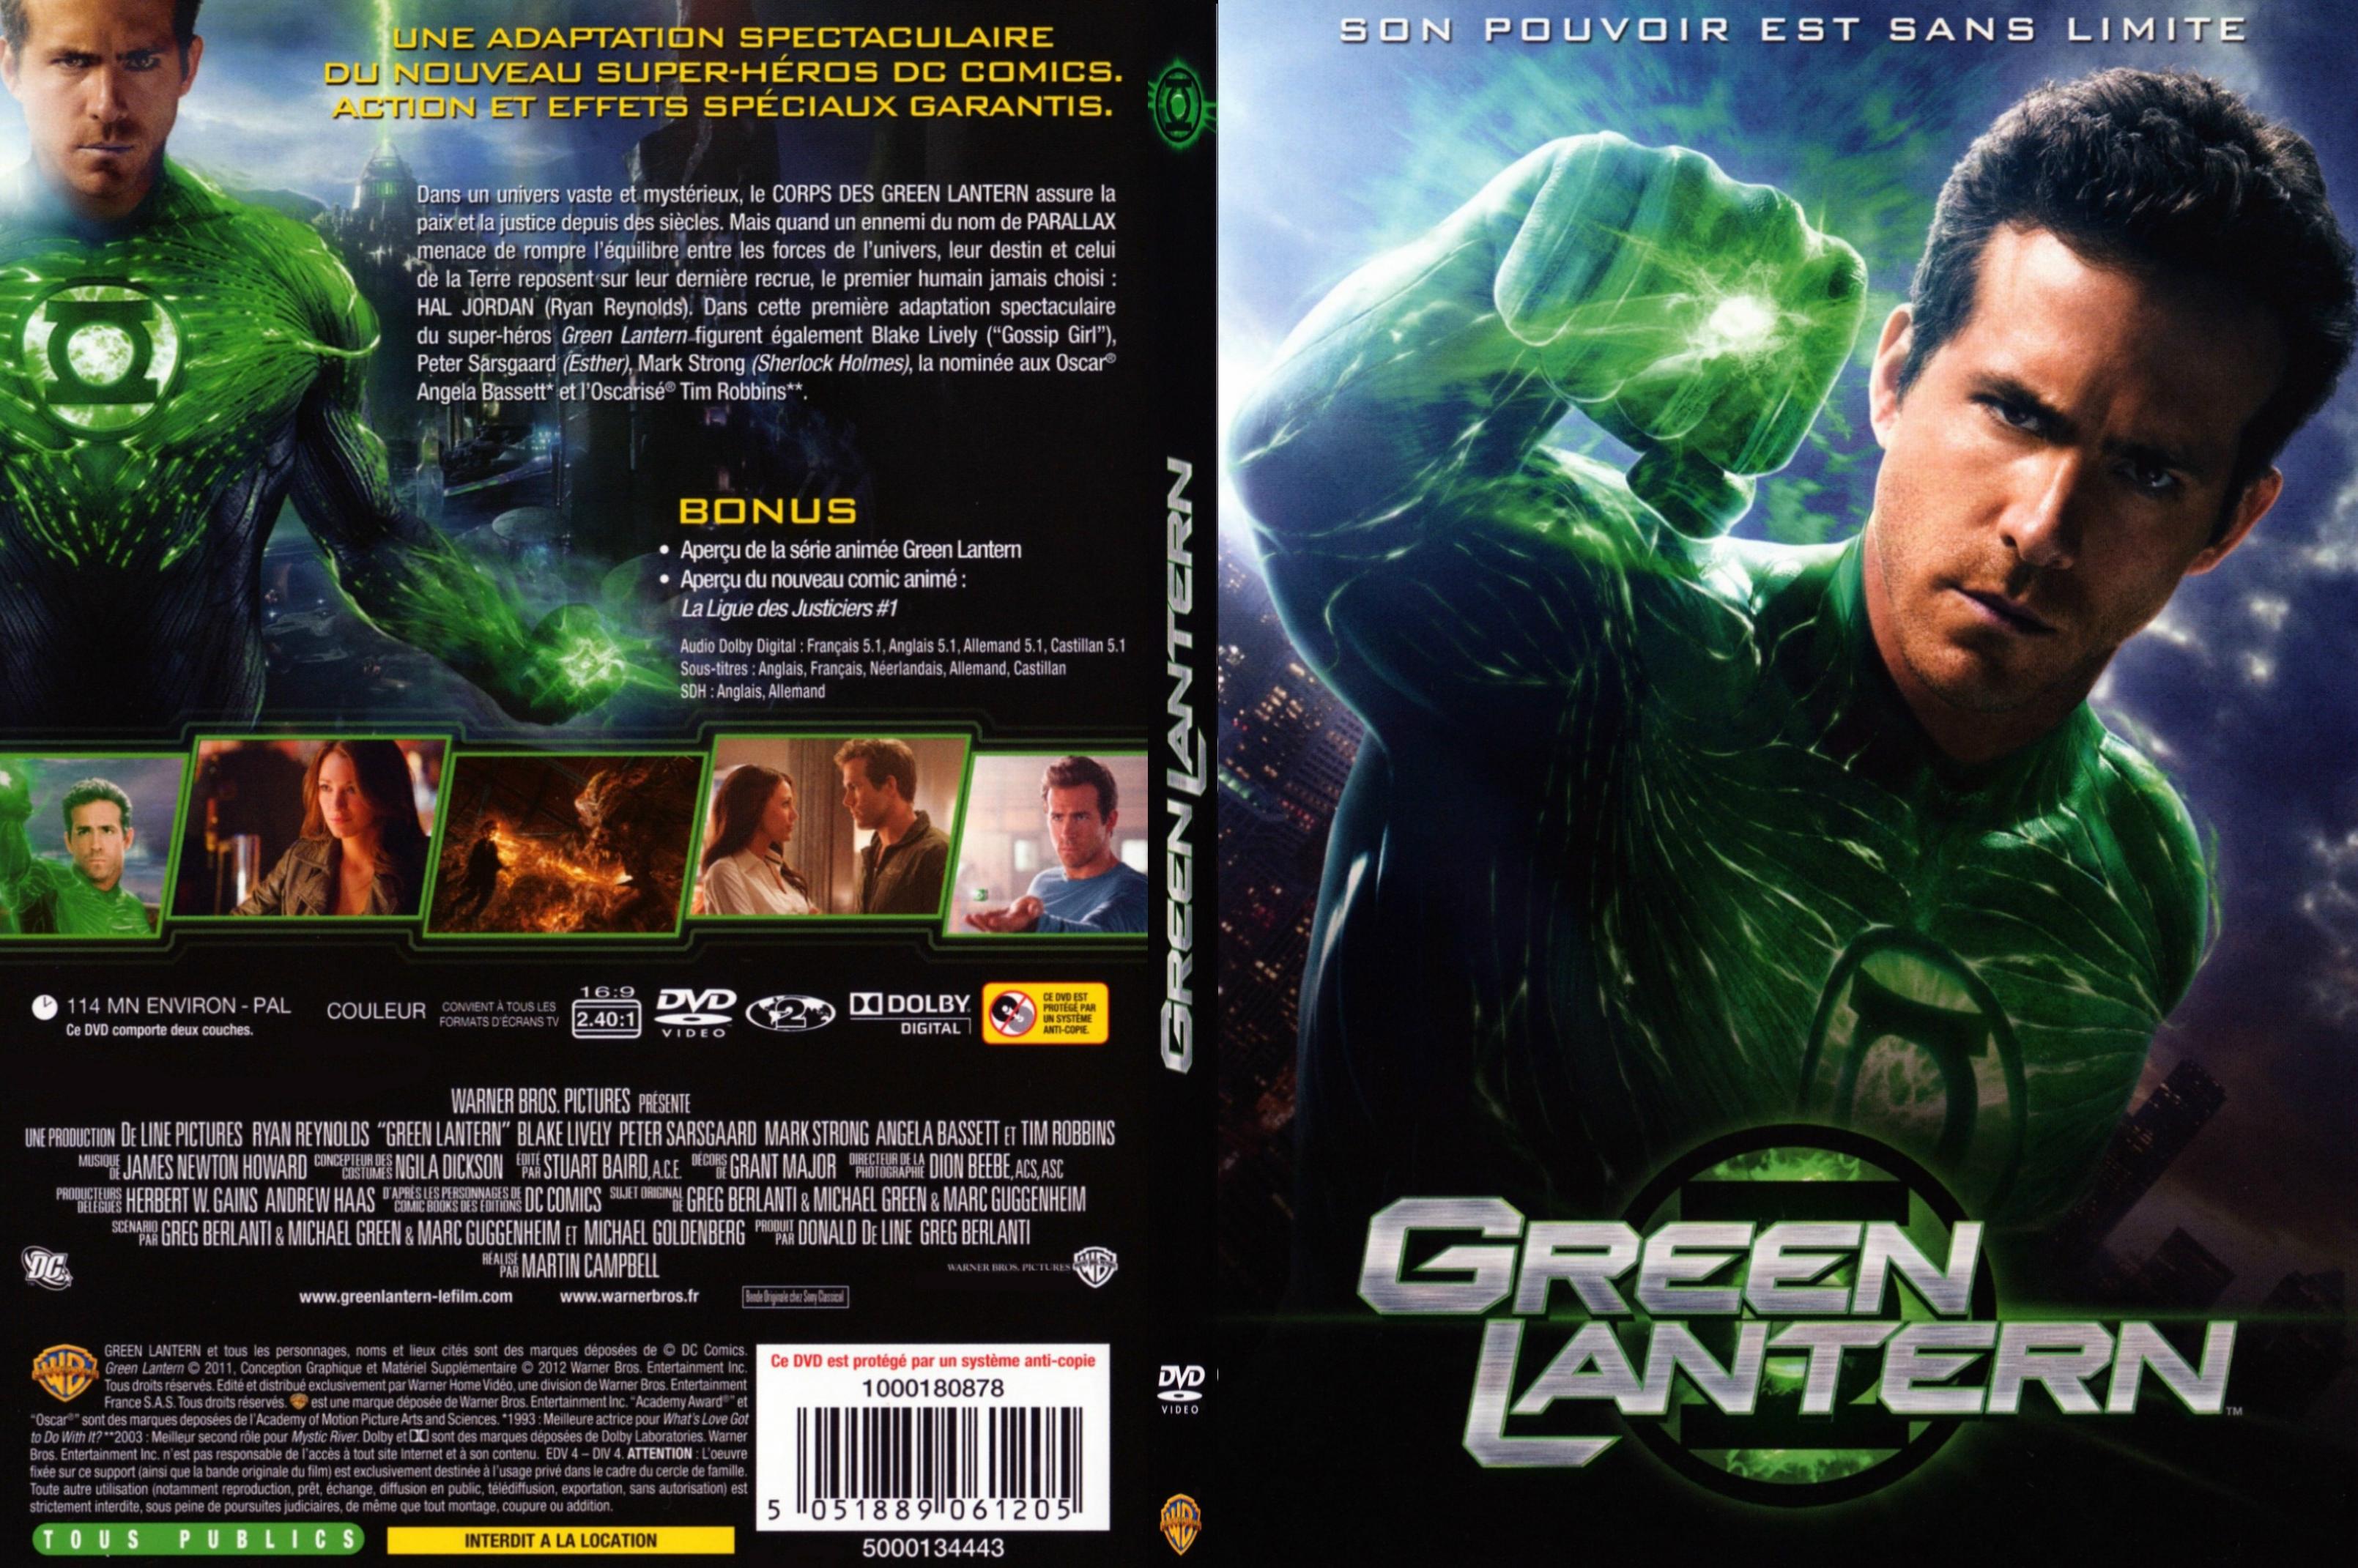 Jaquette DVD Green Lantern - SLIM